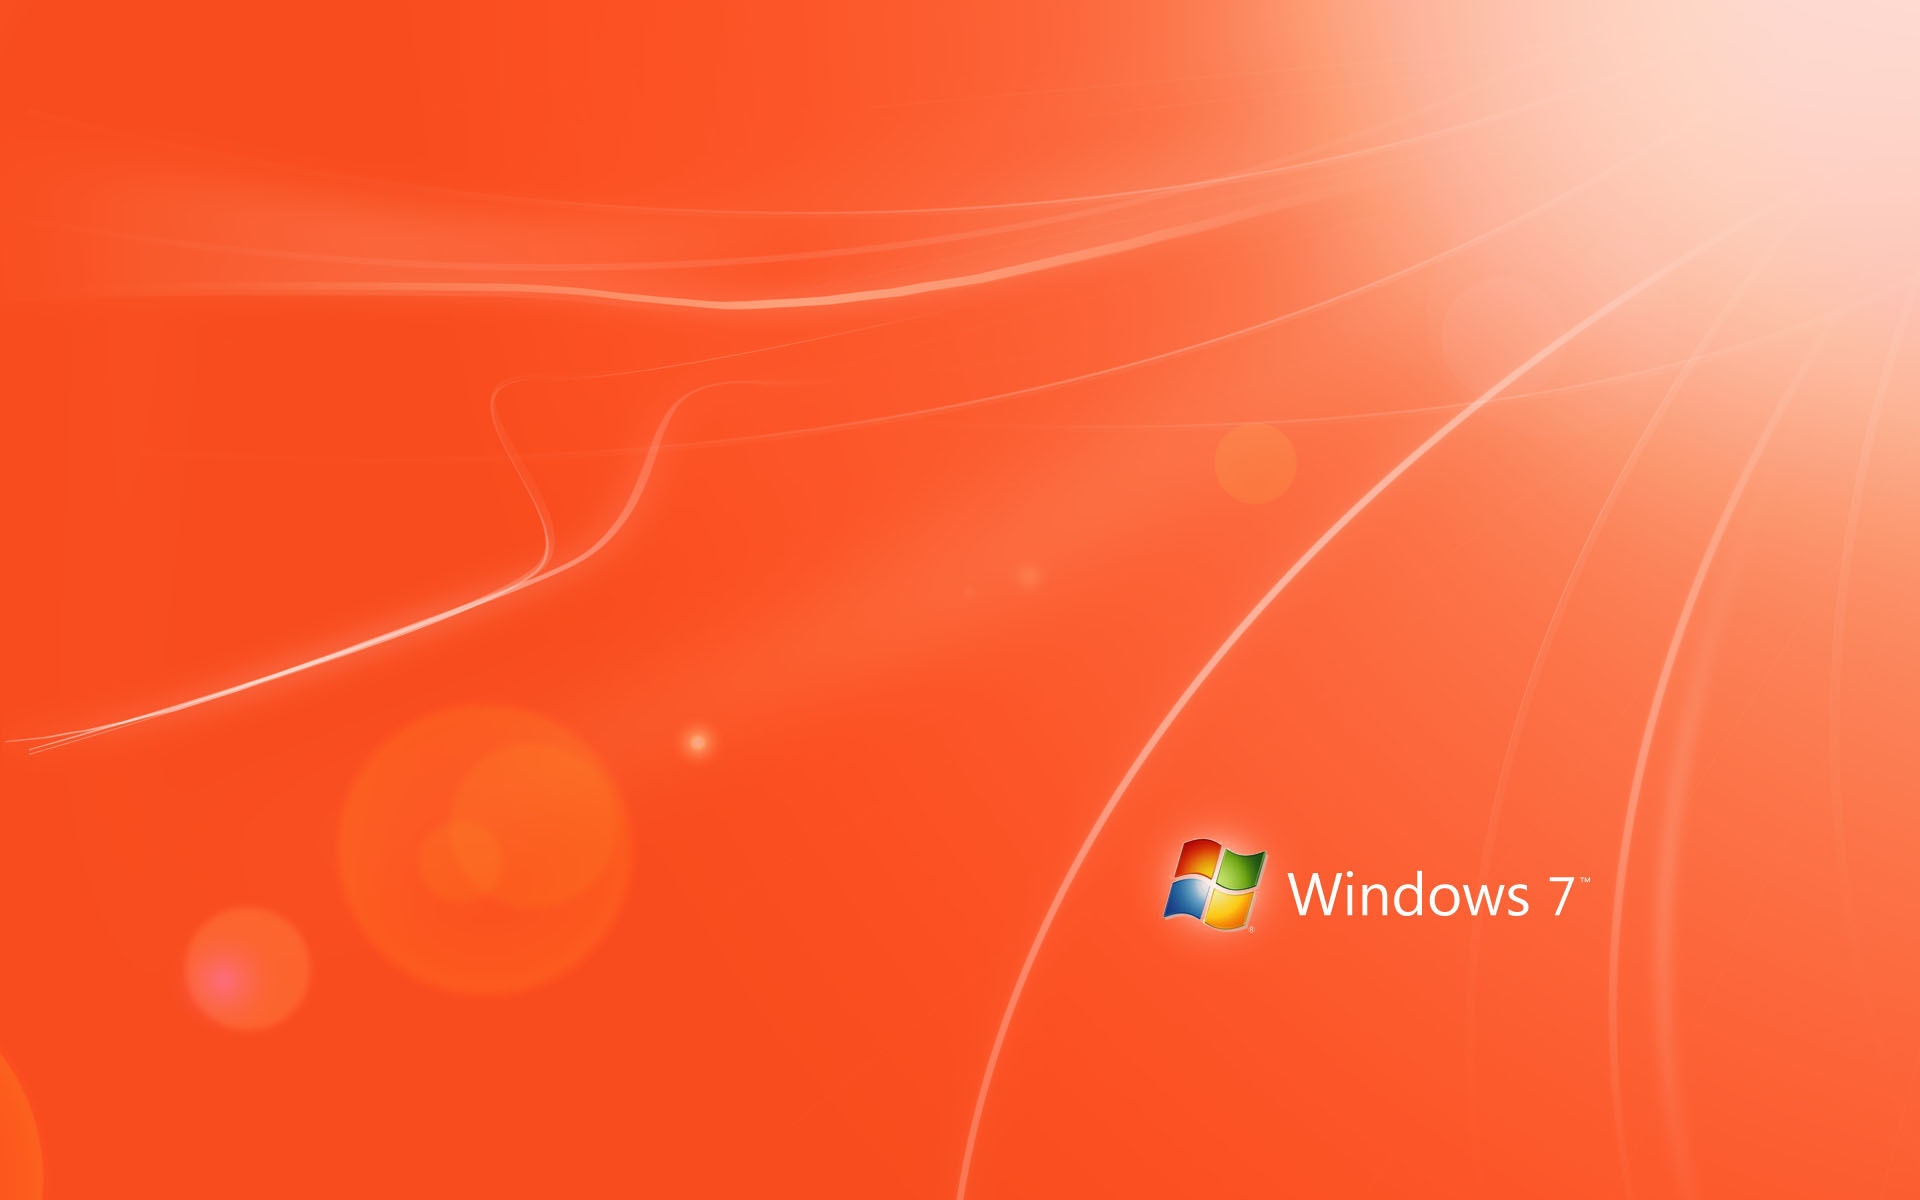 Windows 7 Wallpaper Free for Desktop - Uncalke.com